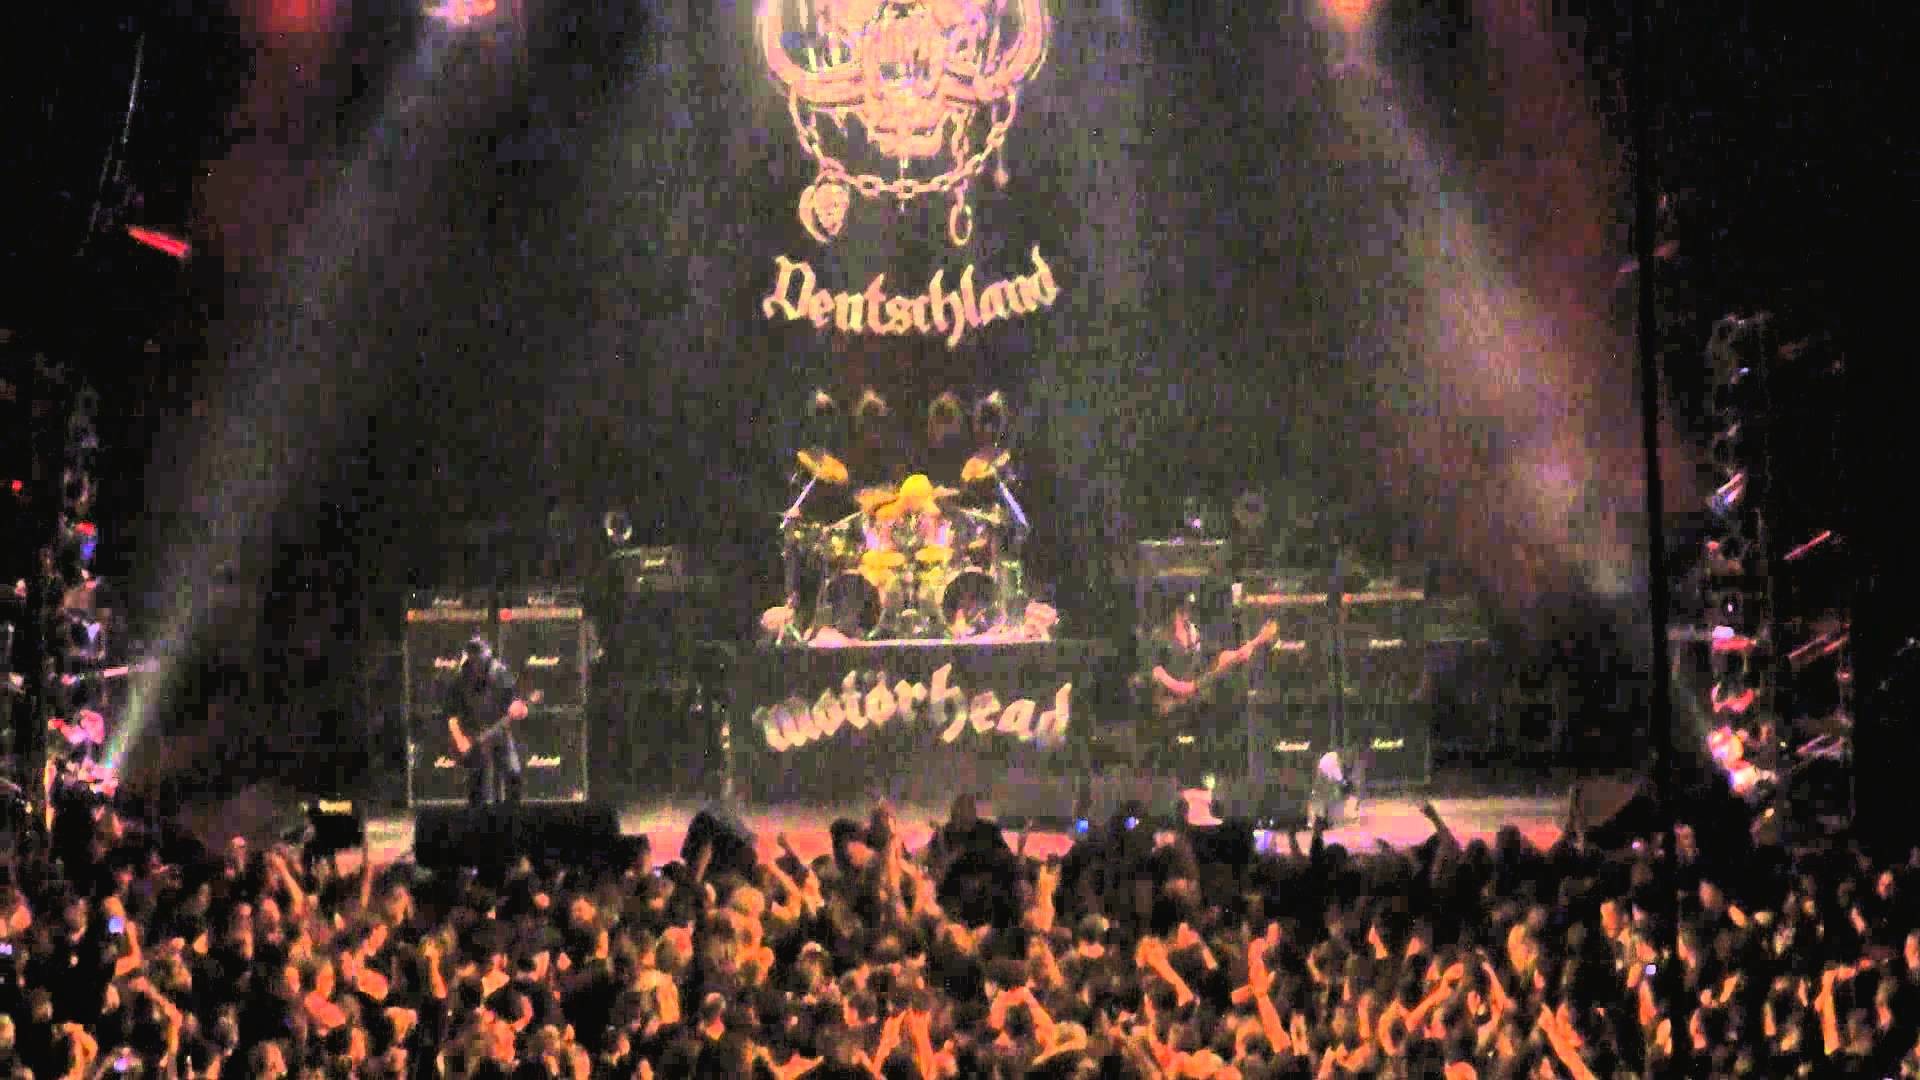 Ace Of Spades Live - Hd Motörhead Concert - HD Wallpaper 